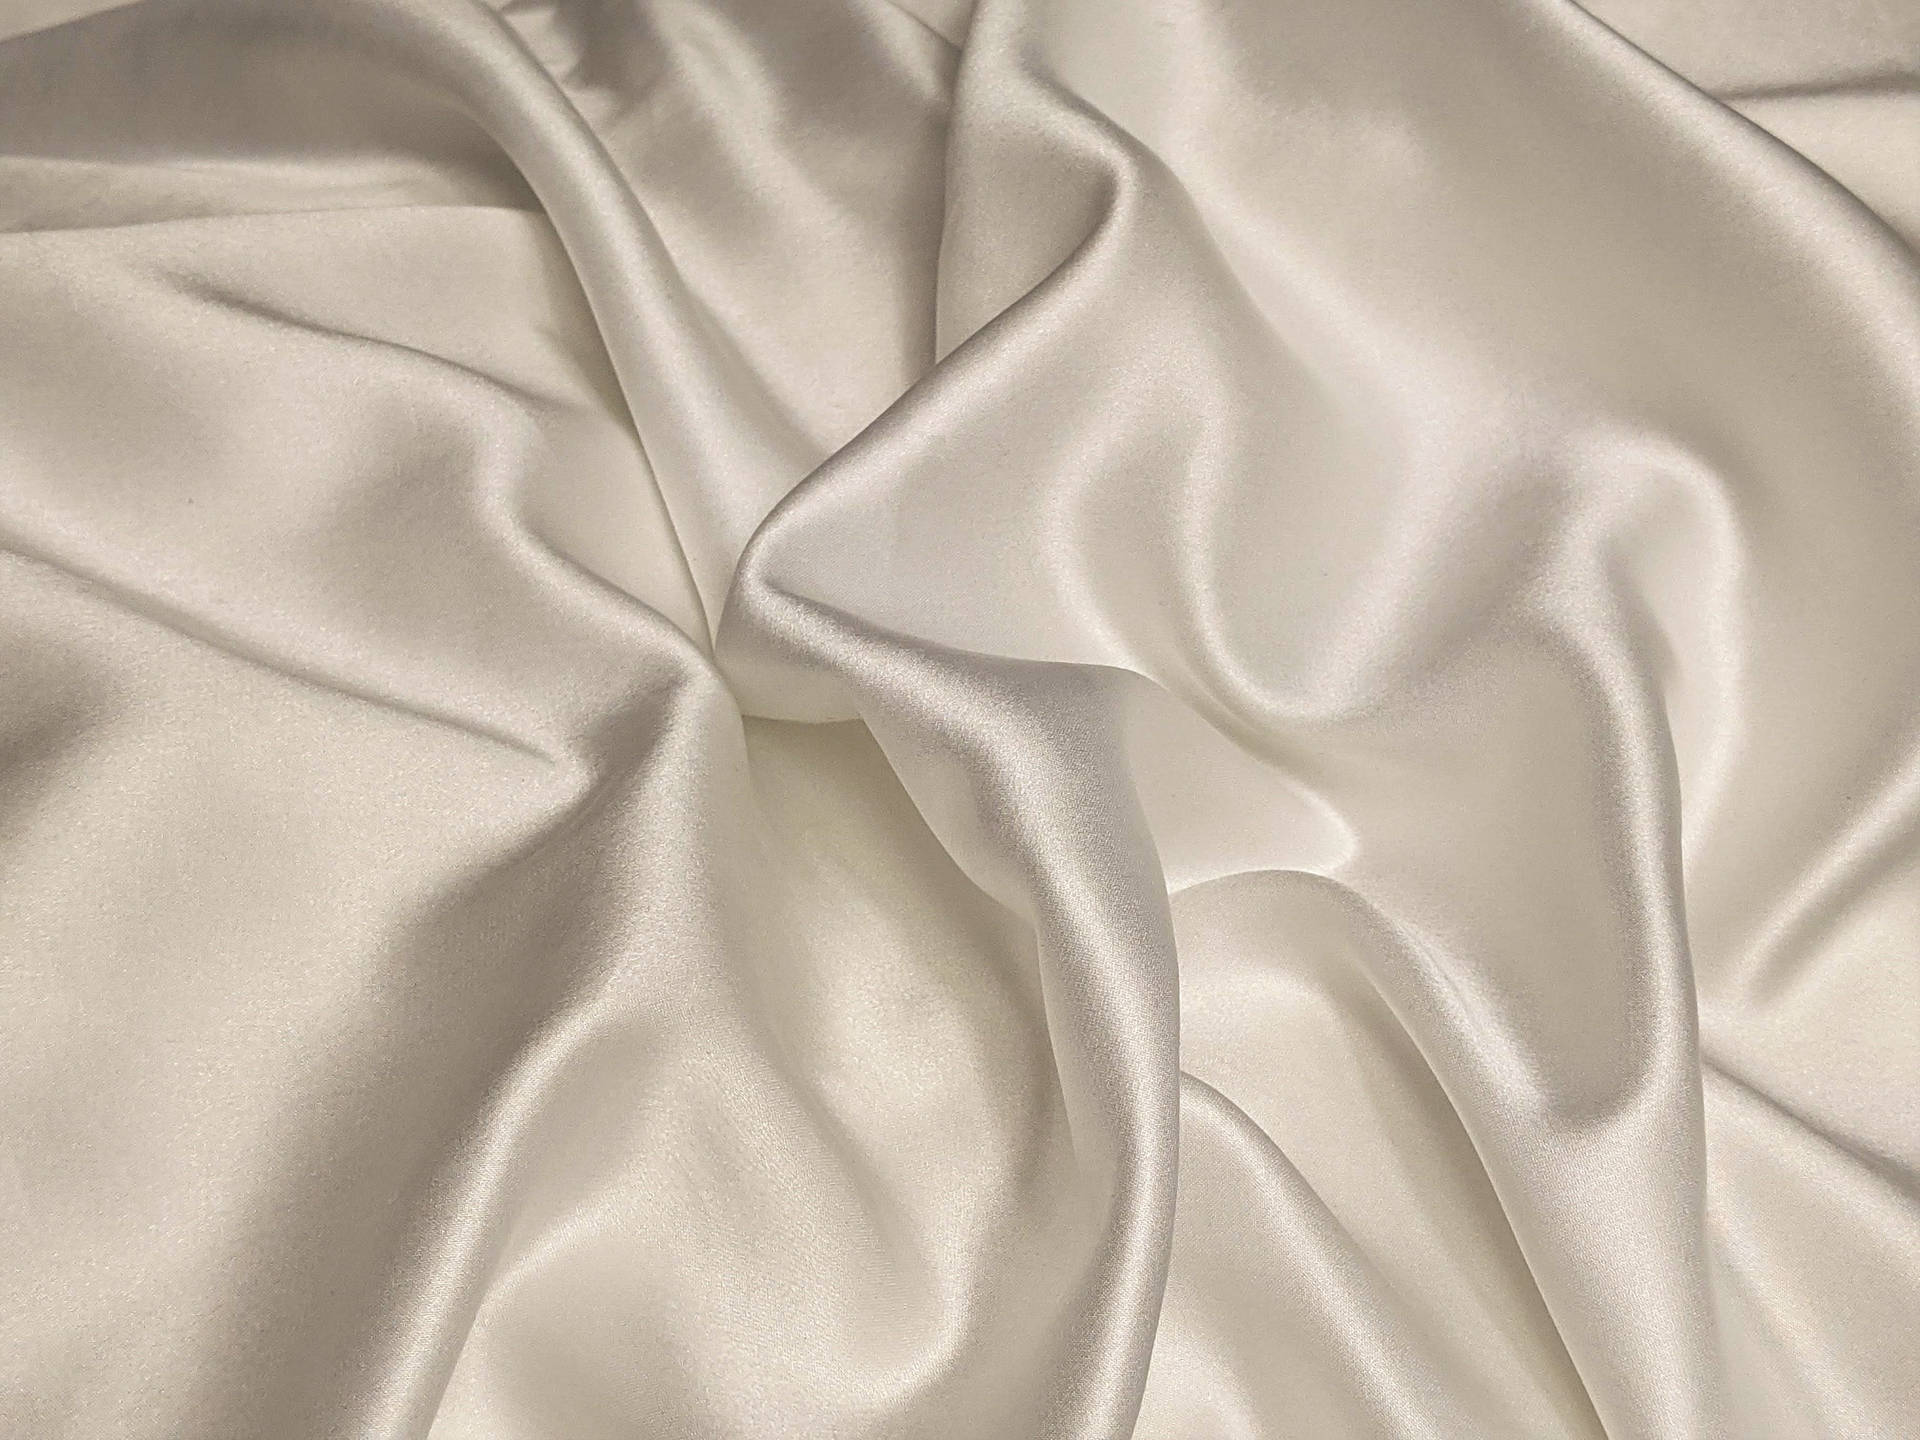 Rippled White Silk Fabric Wallpaper